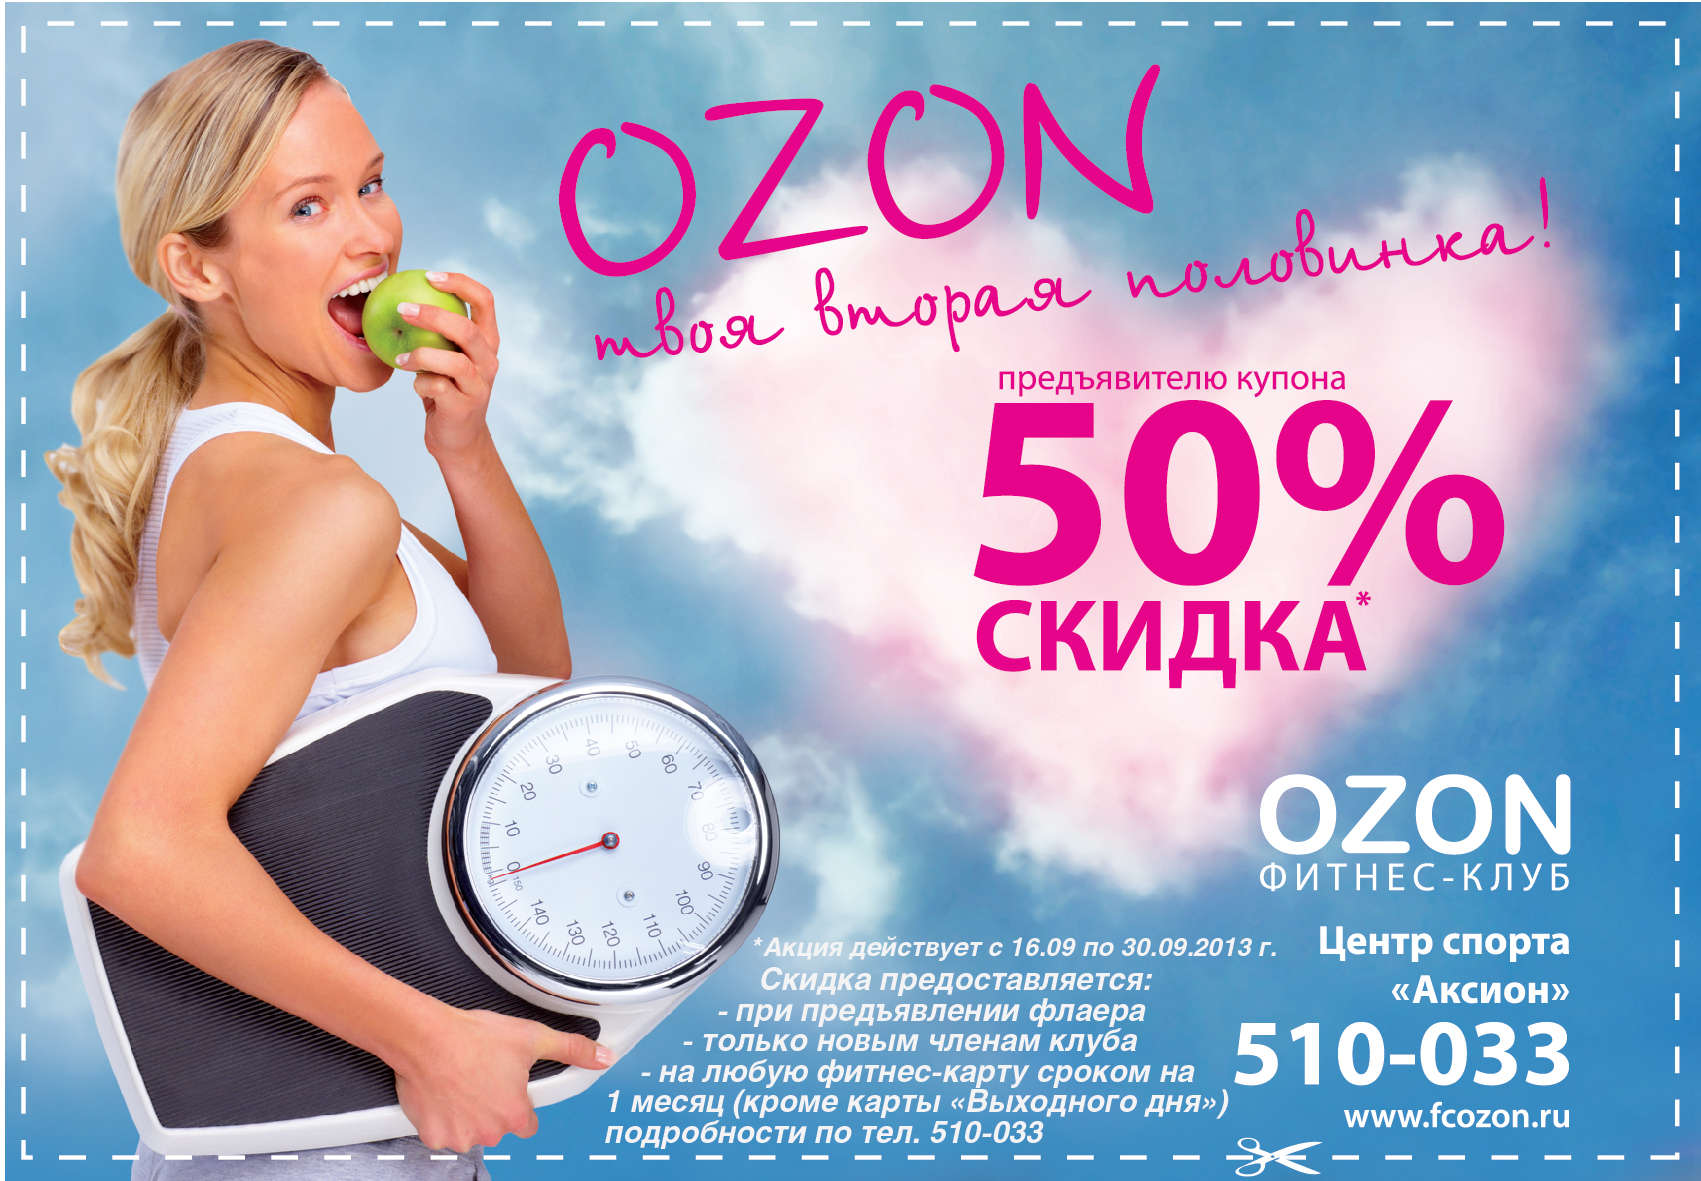 Летние акции в магазинах. OZON реклама. OZON скидки. Скидки. Баннер для акции Озон.